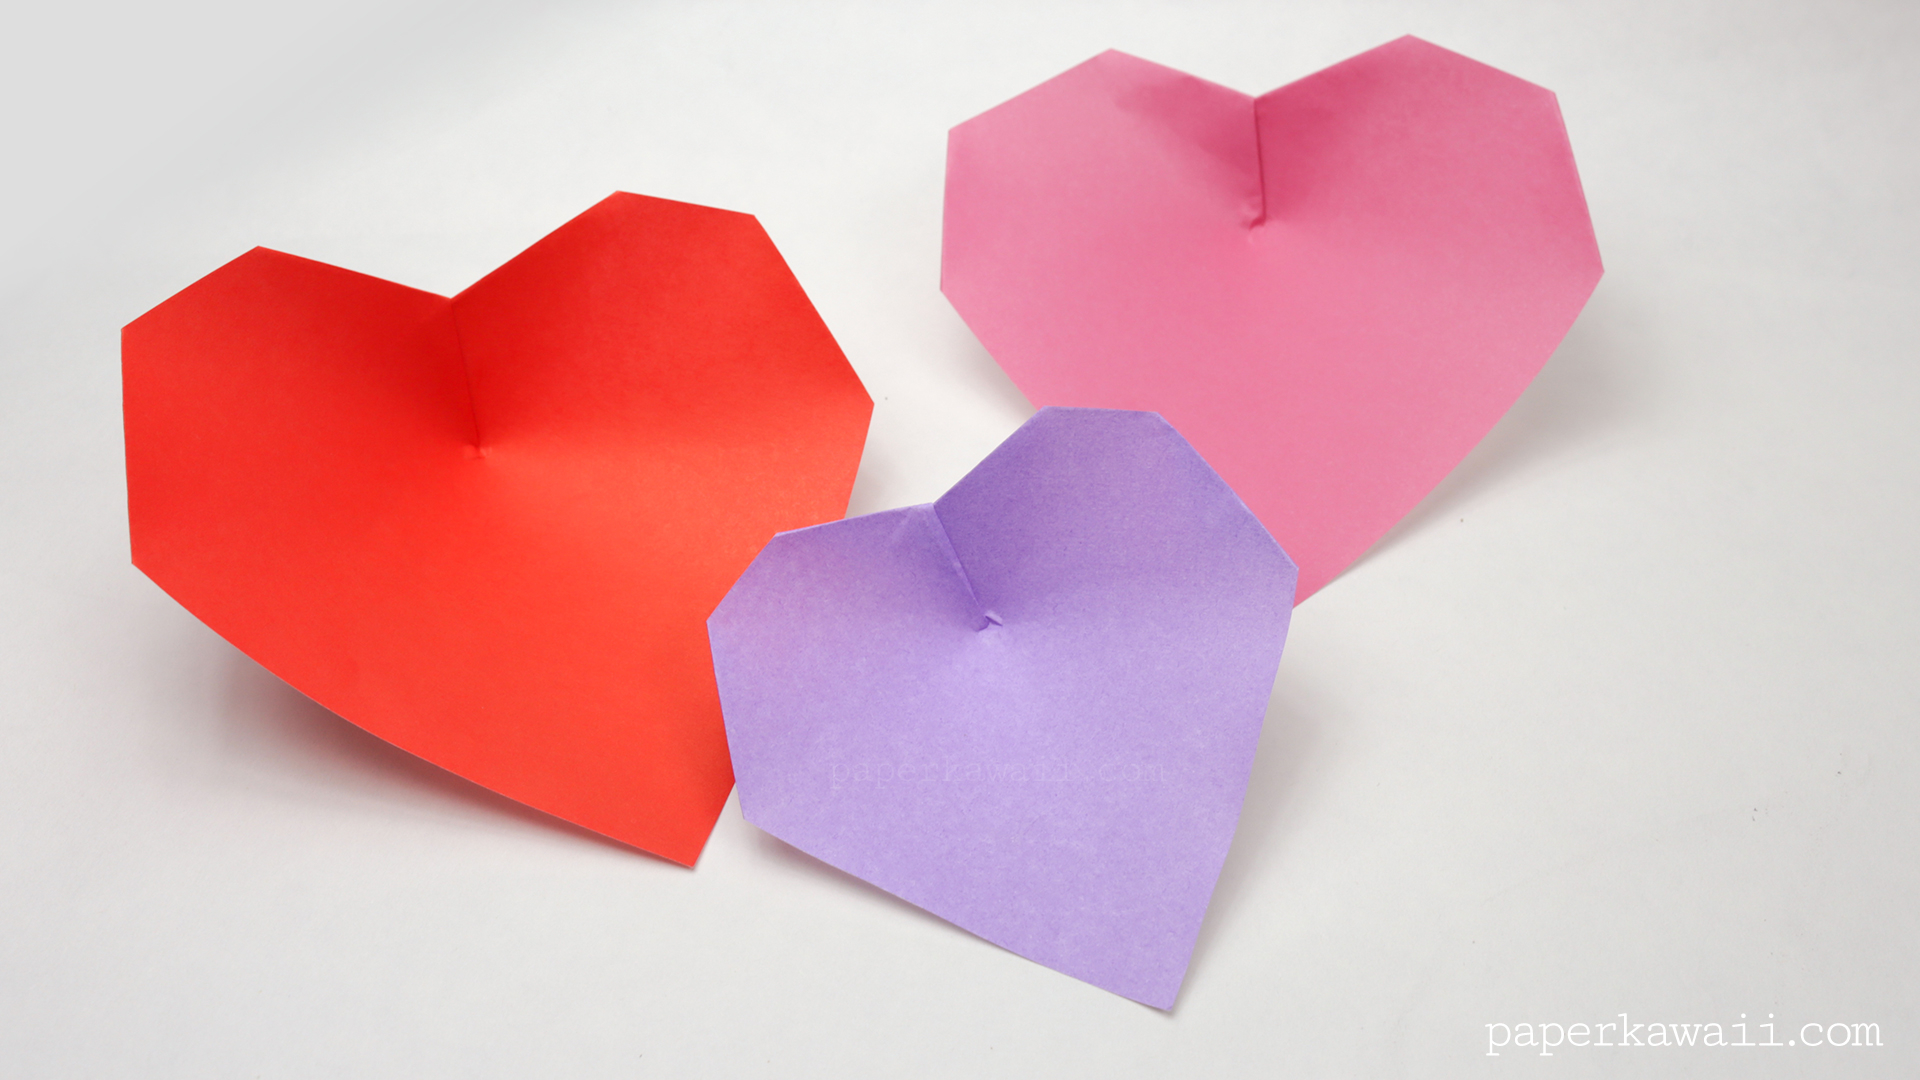 Origami Pokeball Instructions Super Easy Origami Heart Instructions Paper Kawaii